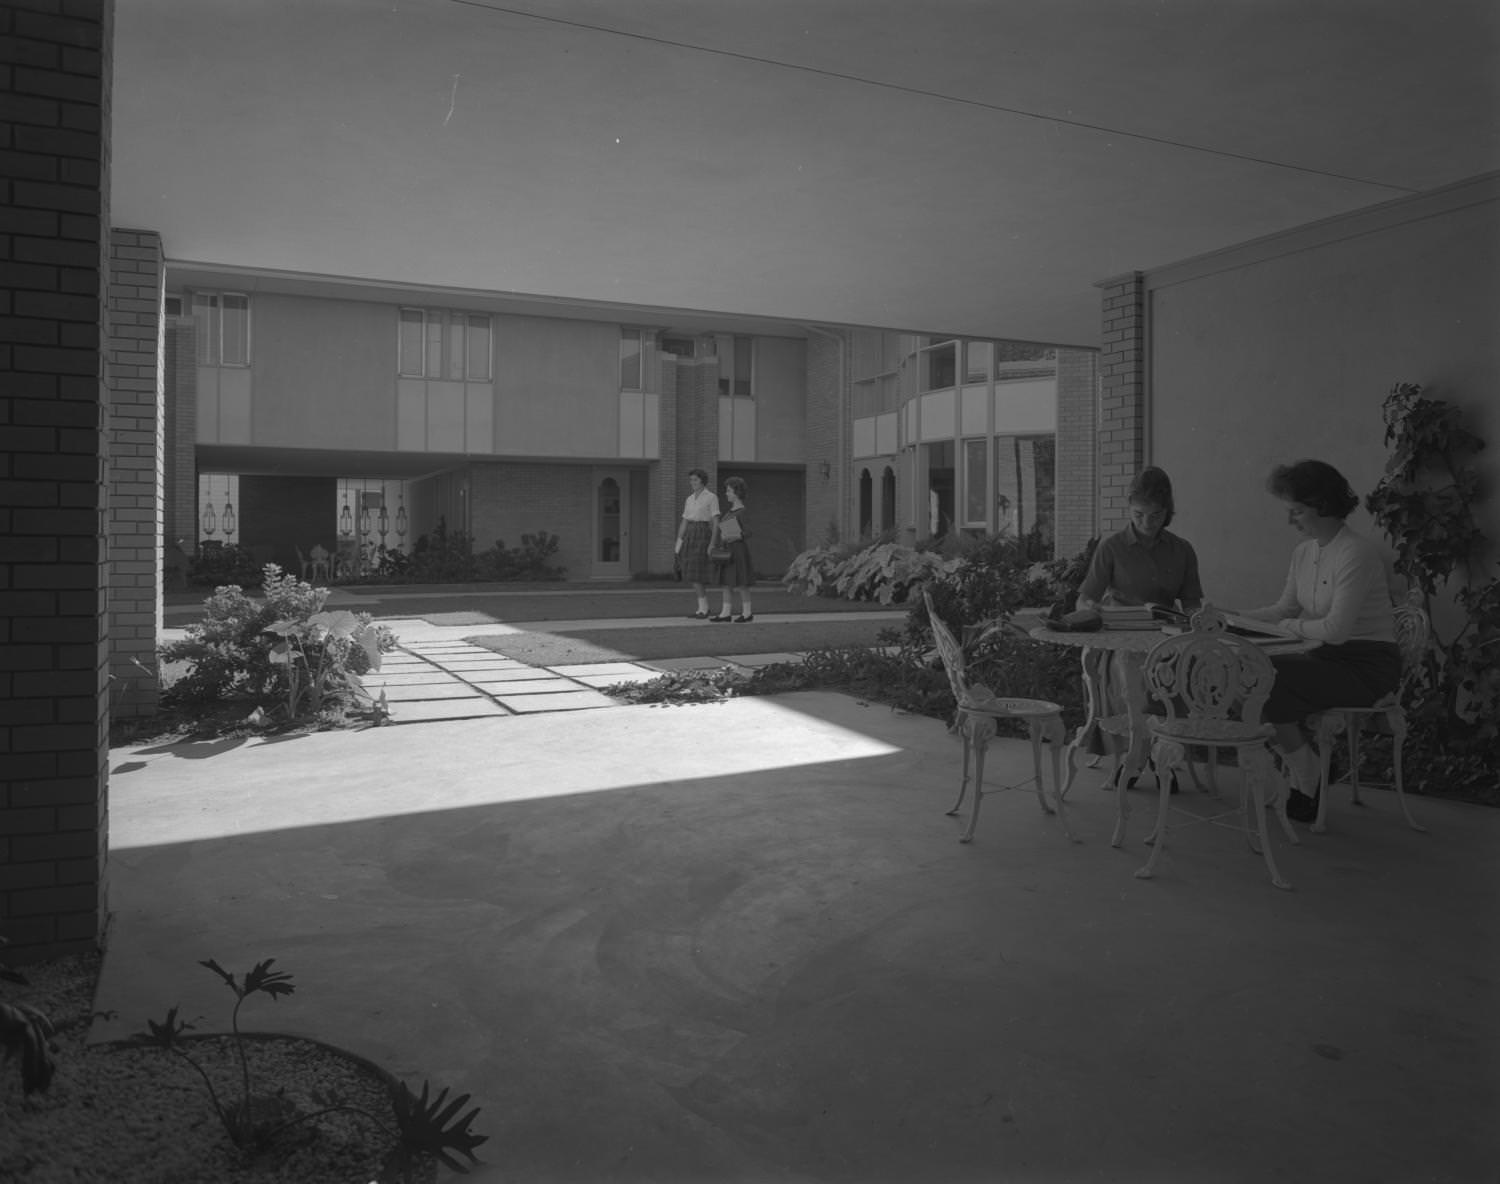 The courtyard of the Gamma Phi Beta sorority building located at 2622 Wichita Street, 1960